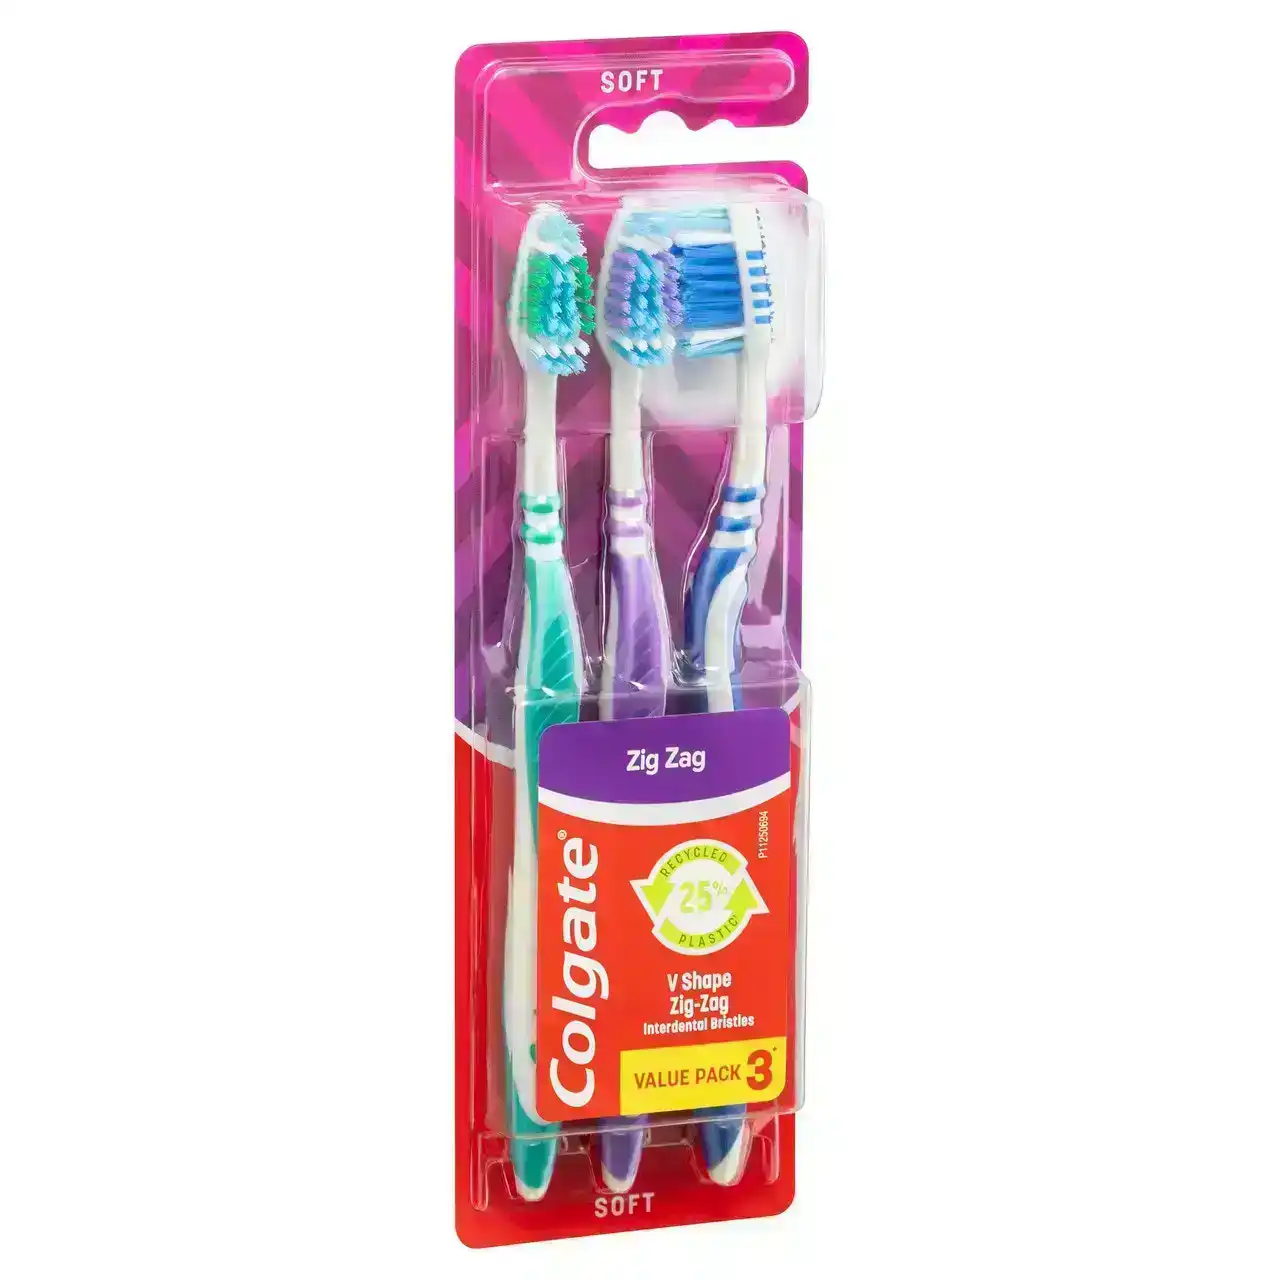 Colgate Zig Zag Manual Toothbrush, Value 3 Pack, Soft Bristles, Interdental Reach